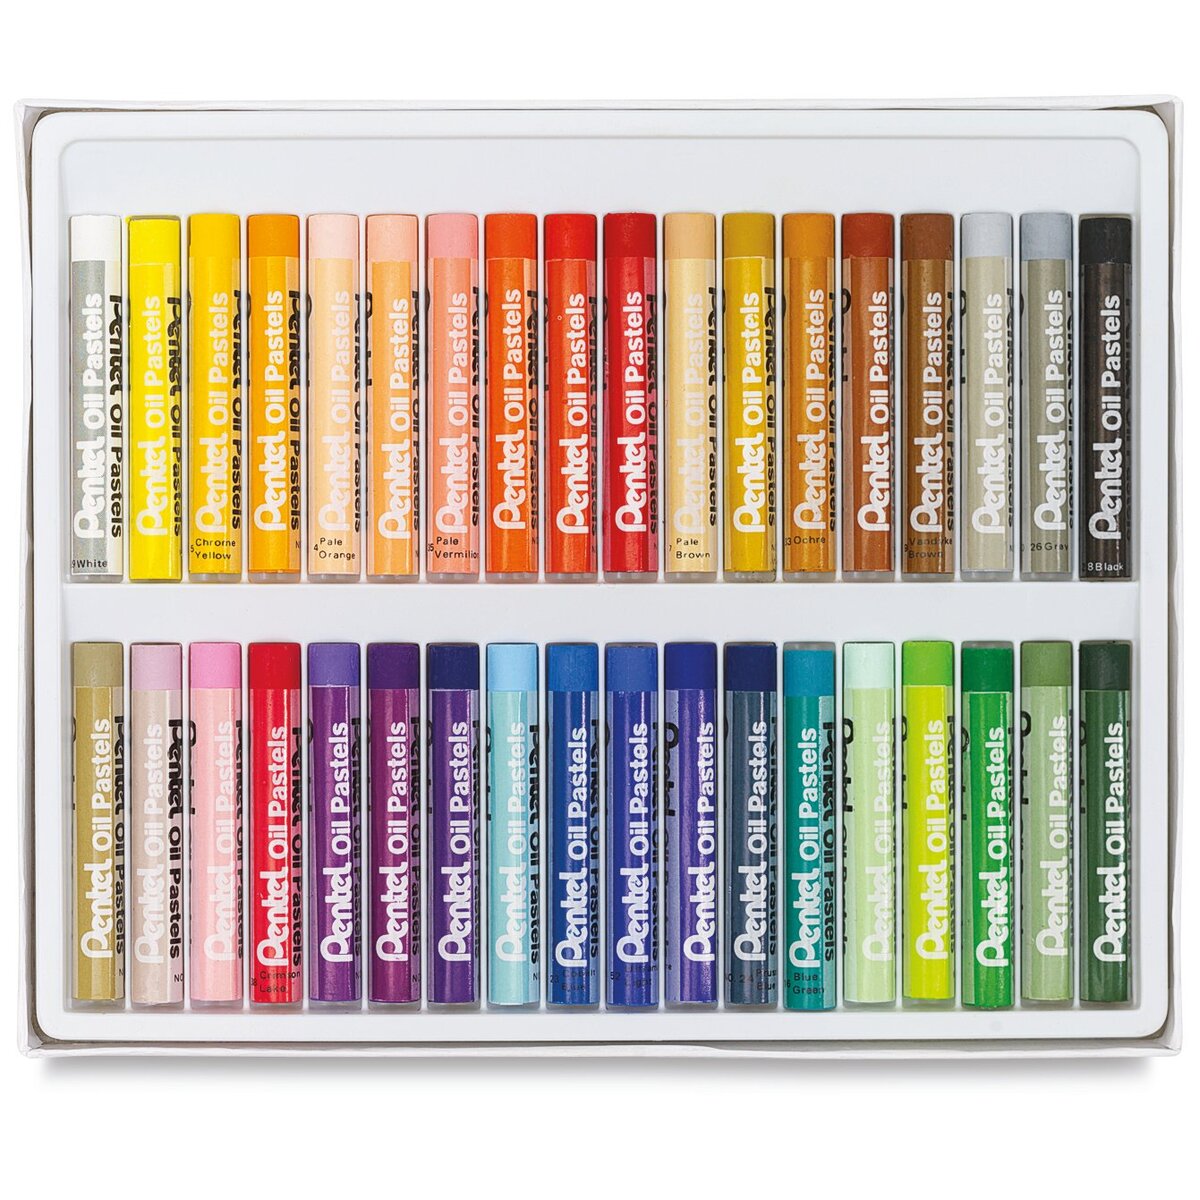 Crayola Oil Pastel Sets, BLICK Art Materials